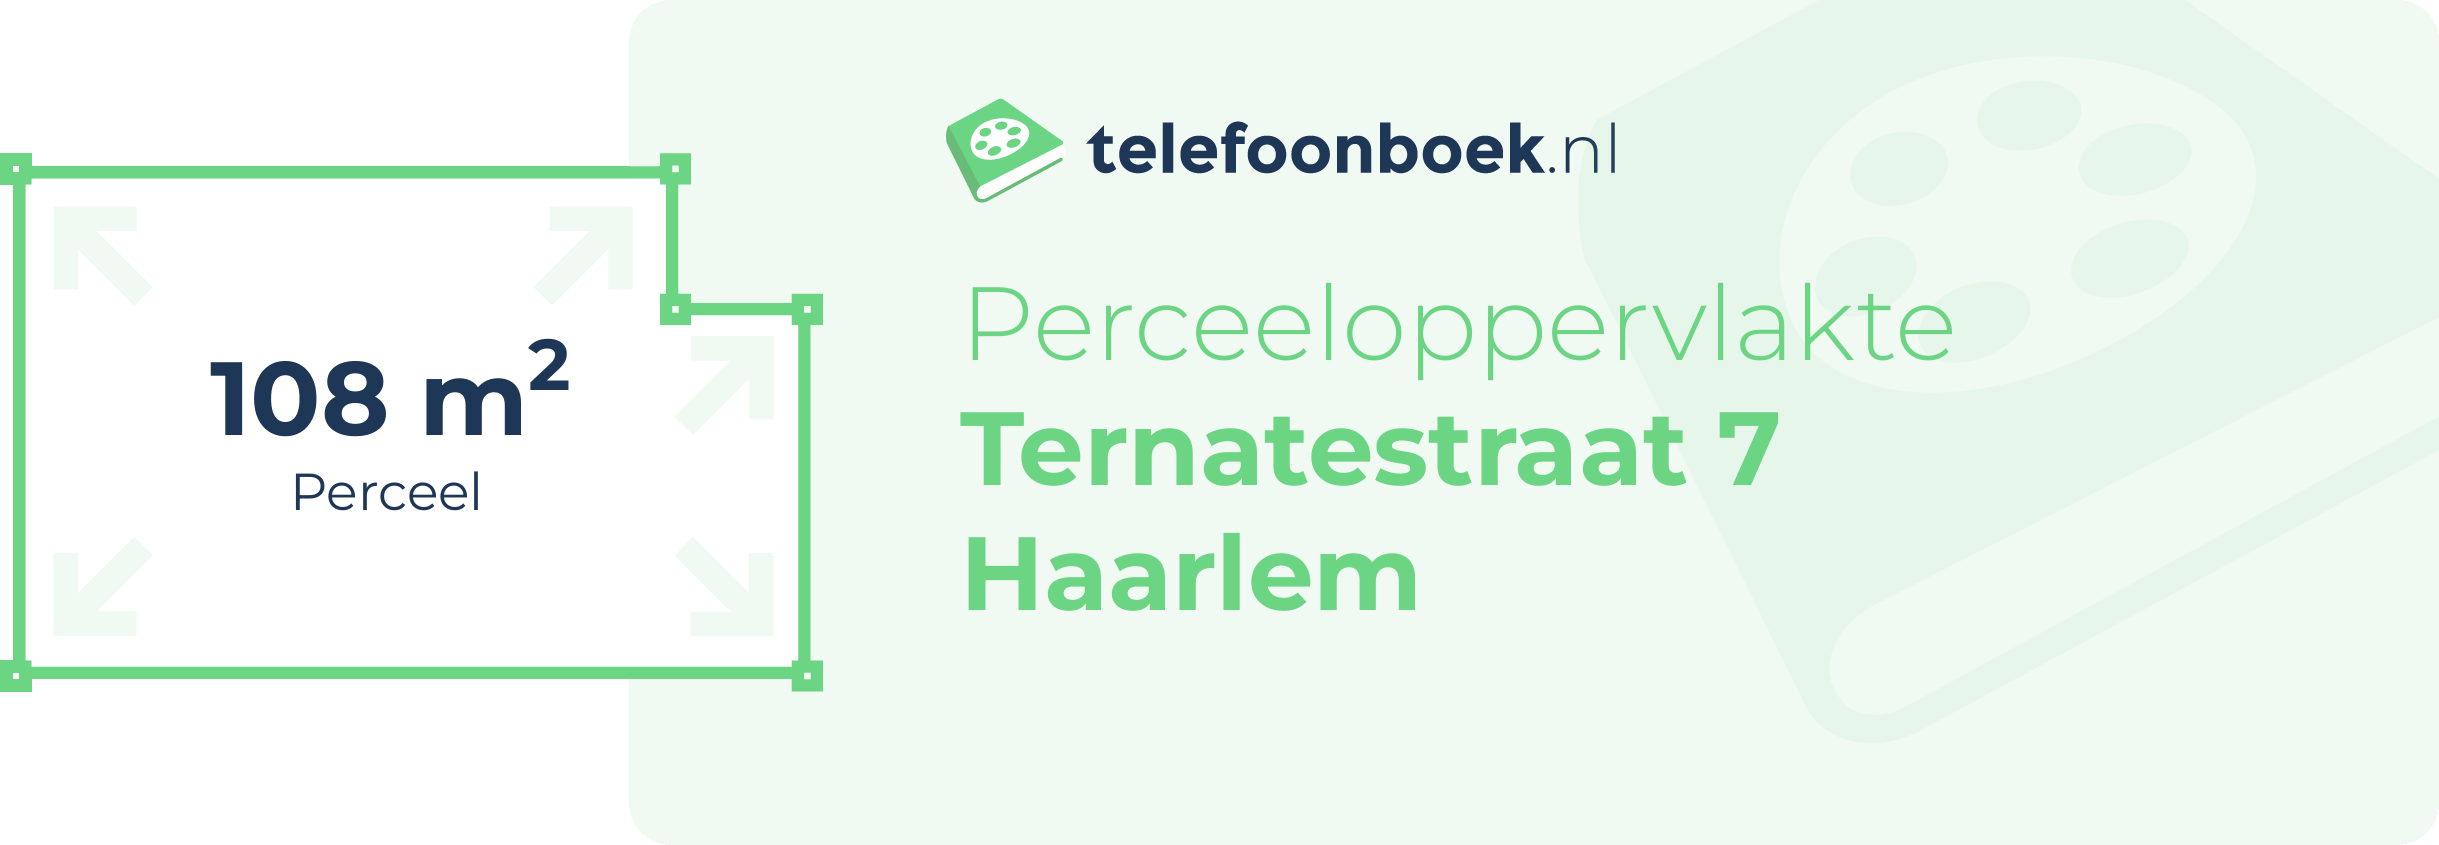 Perceeloppervlakte Ternatestraat 7 Haarlem